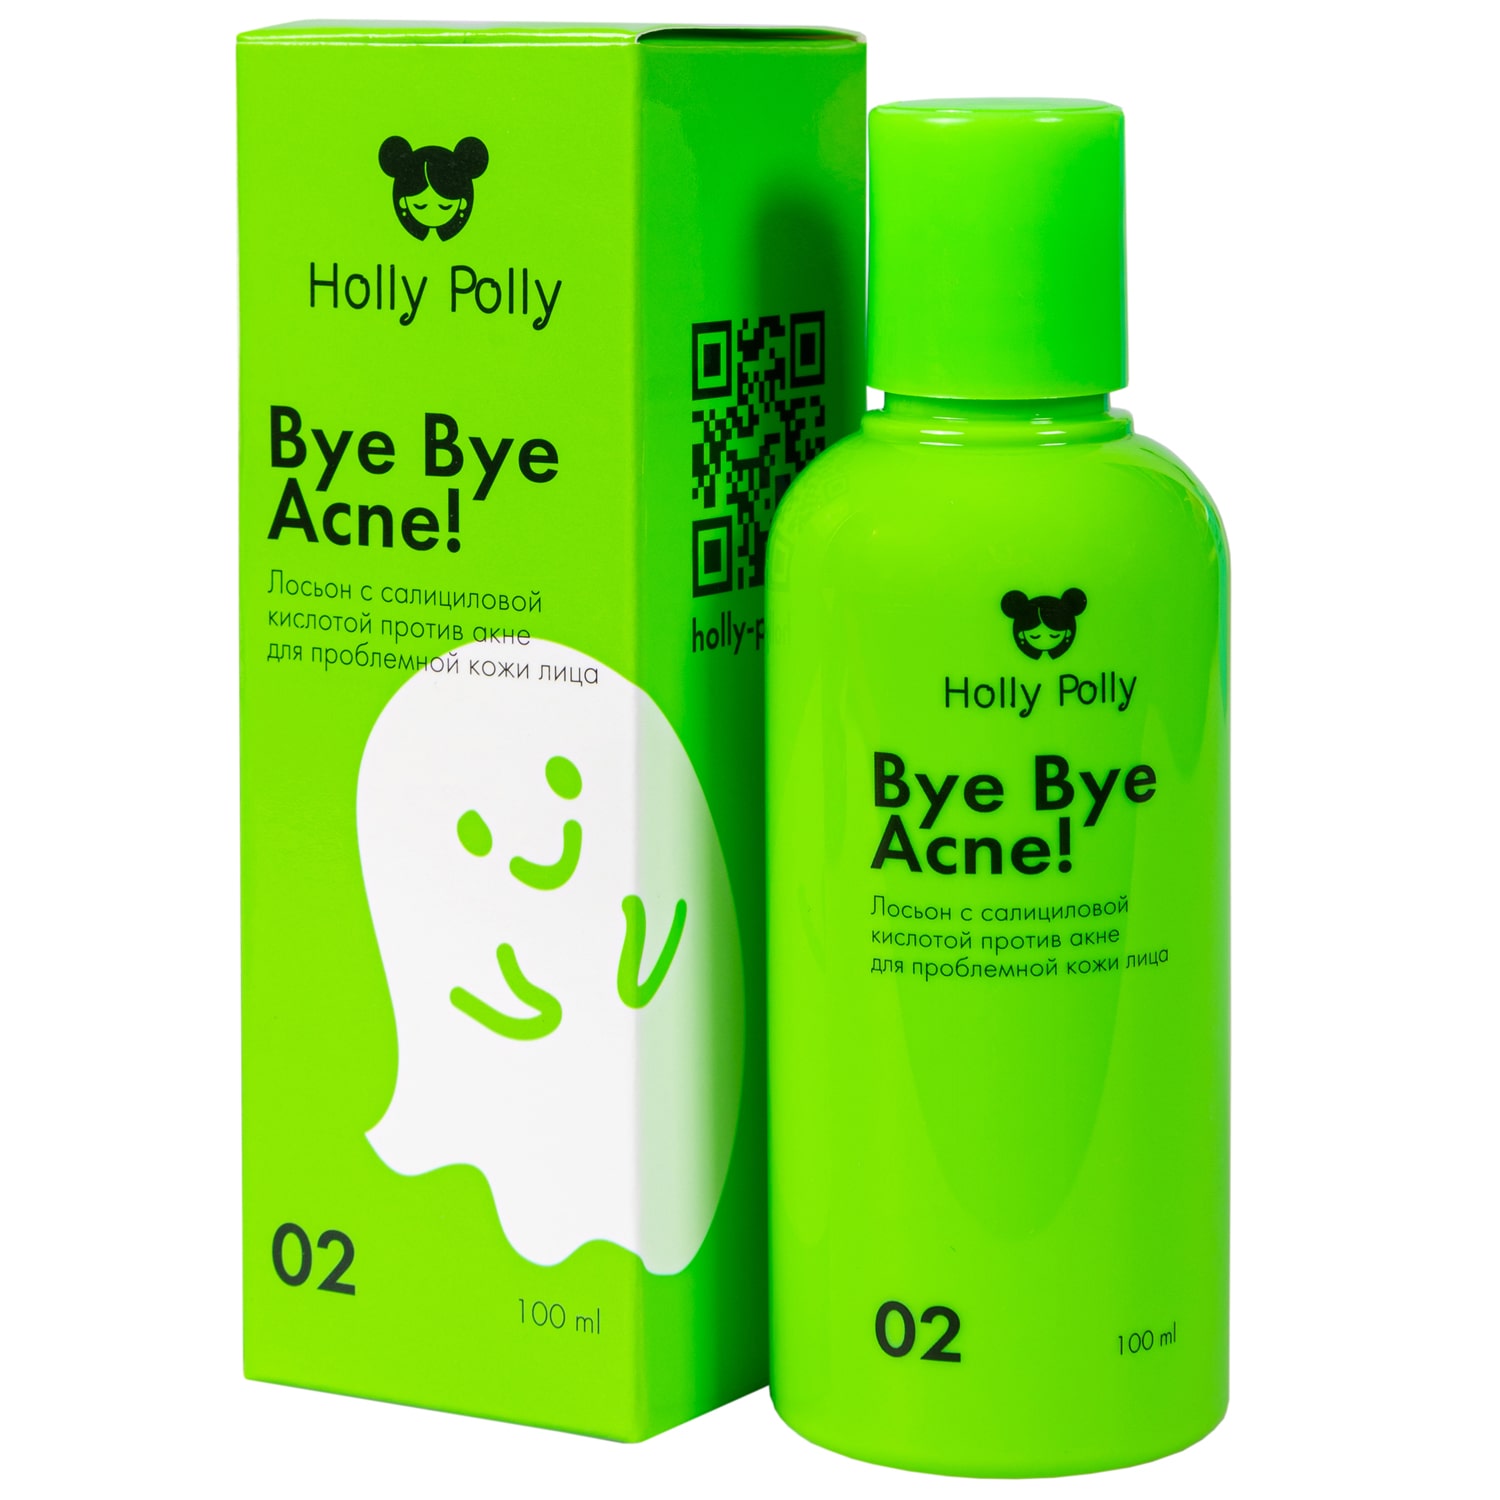 Holly Polly Лосьон с 2% салициловой кислотой против акне и воспалений, 100 мл (Holly Polly, Bye Bye Acne!)